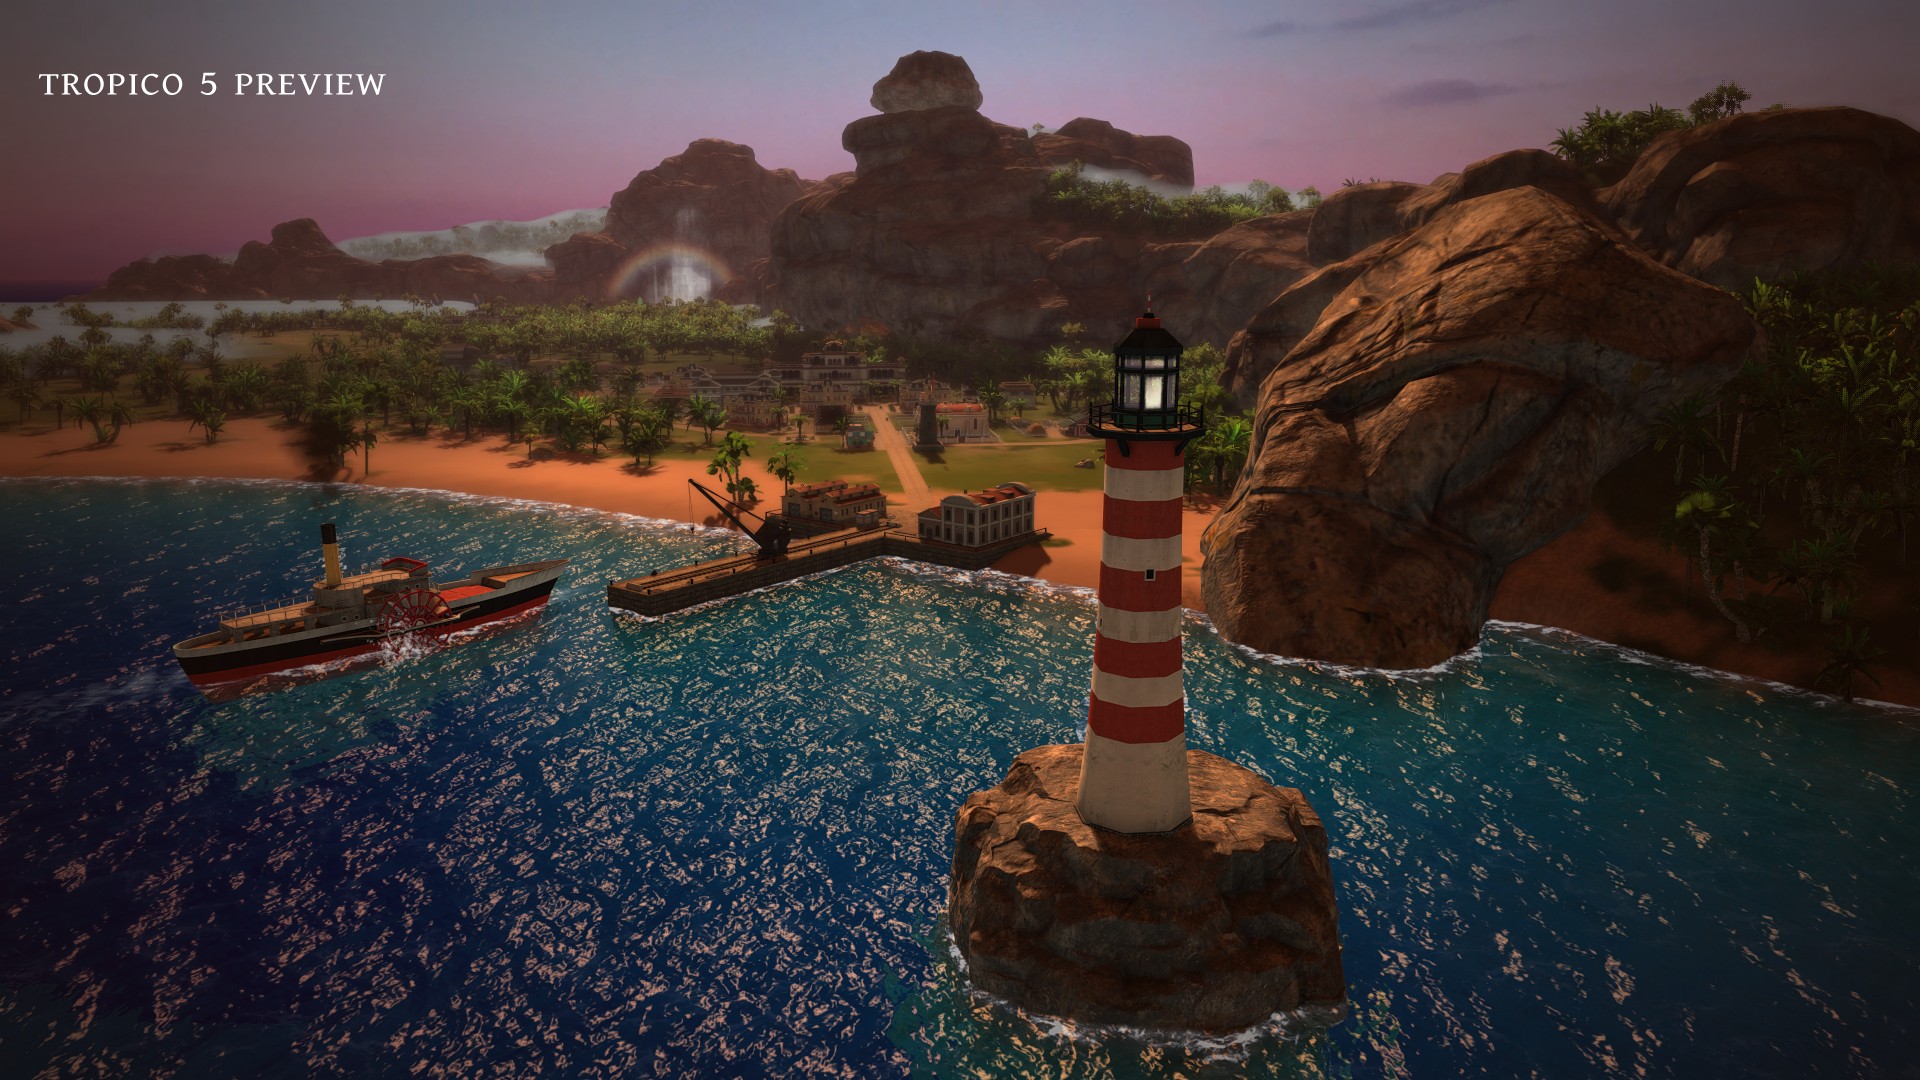 Tropico-5-Box-Art-and-New-Screenshots-Emerge-Game-Launches-This-Summer-430690-10.jpg